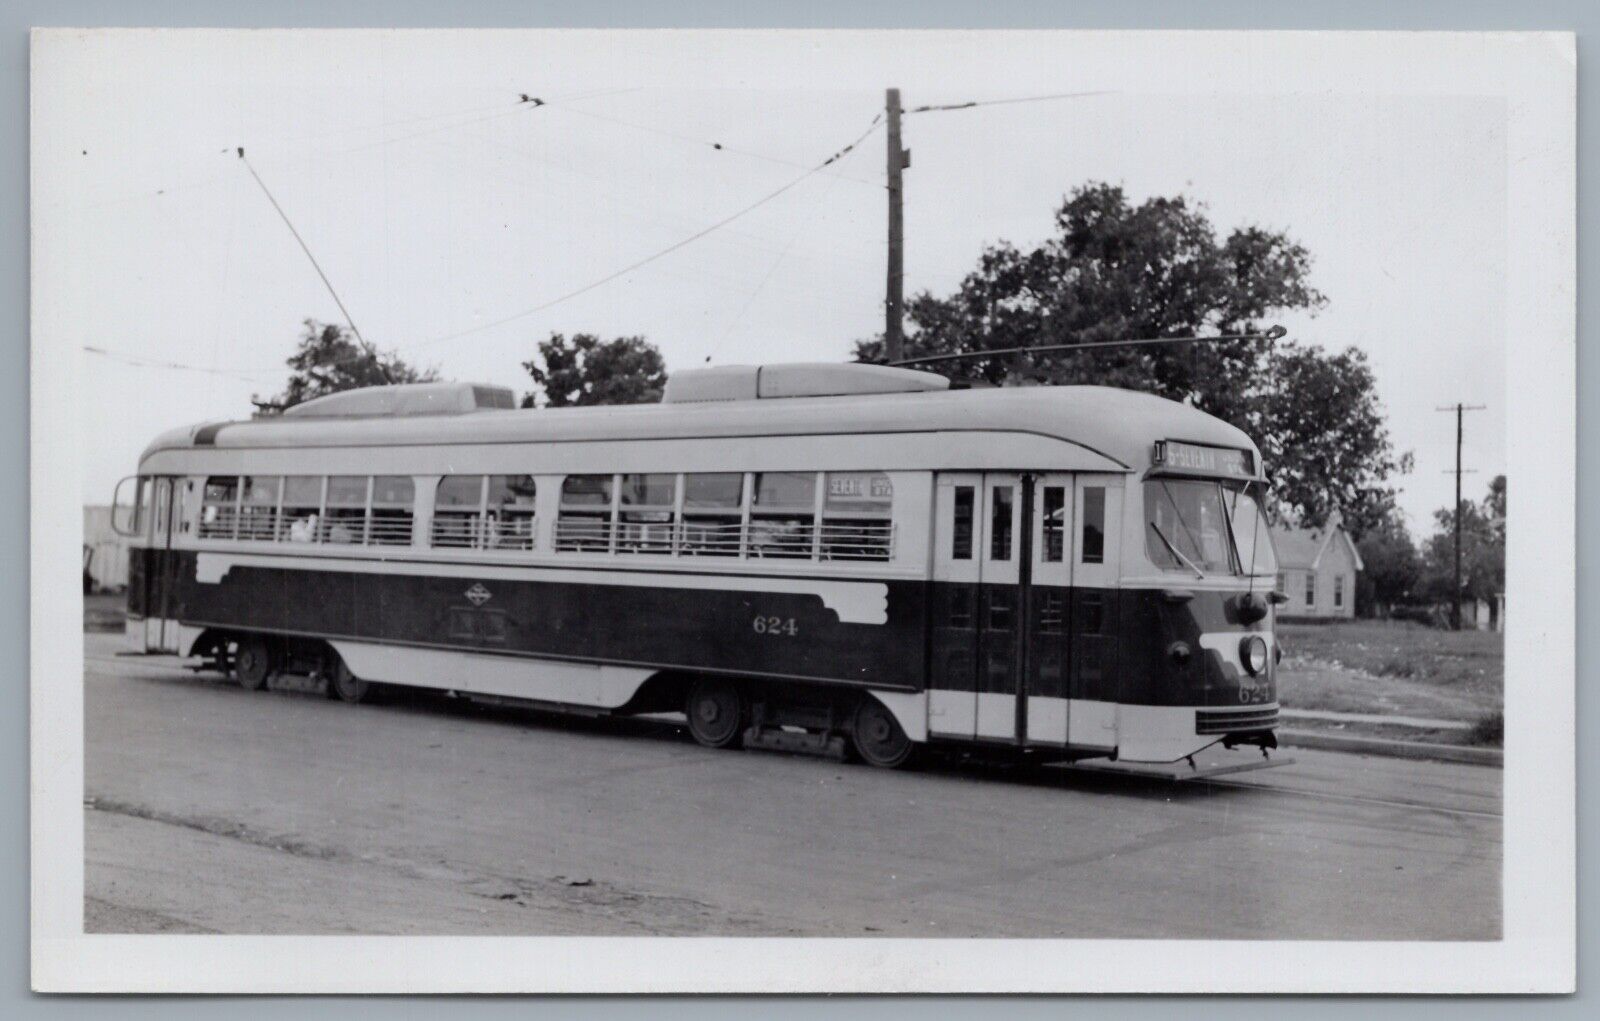 Trolley Photo - Dallas Railway & Terminal #624 PCC Streetcar 1930s Transit Texas